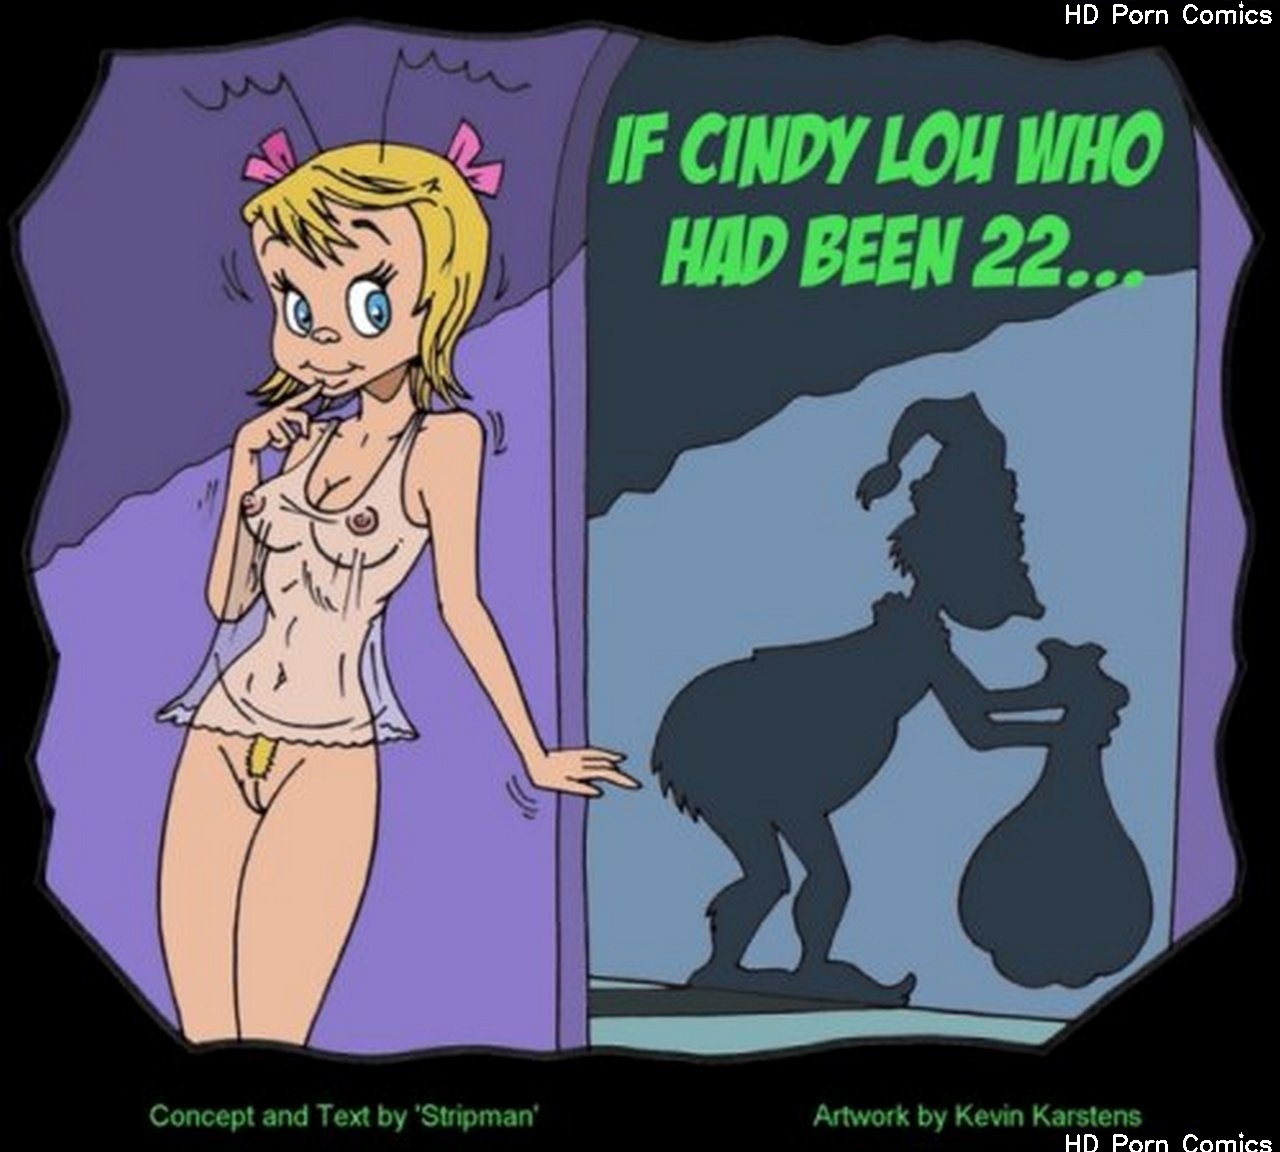 Sweet Cindy Lou Porn - If Cindy Lou Who Had Been 22 comic porn | HD Porn Comics